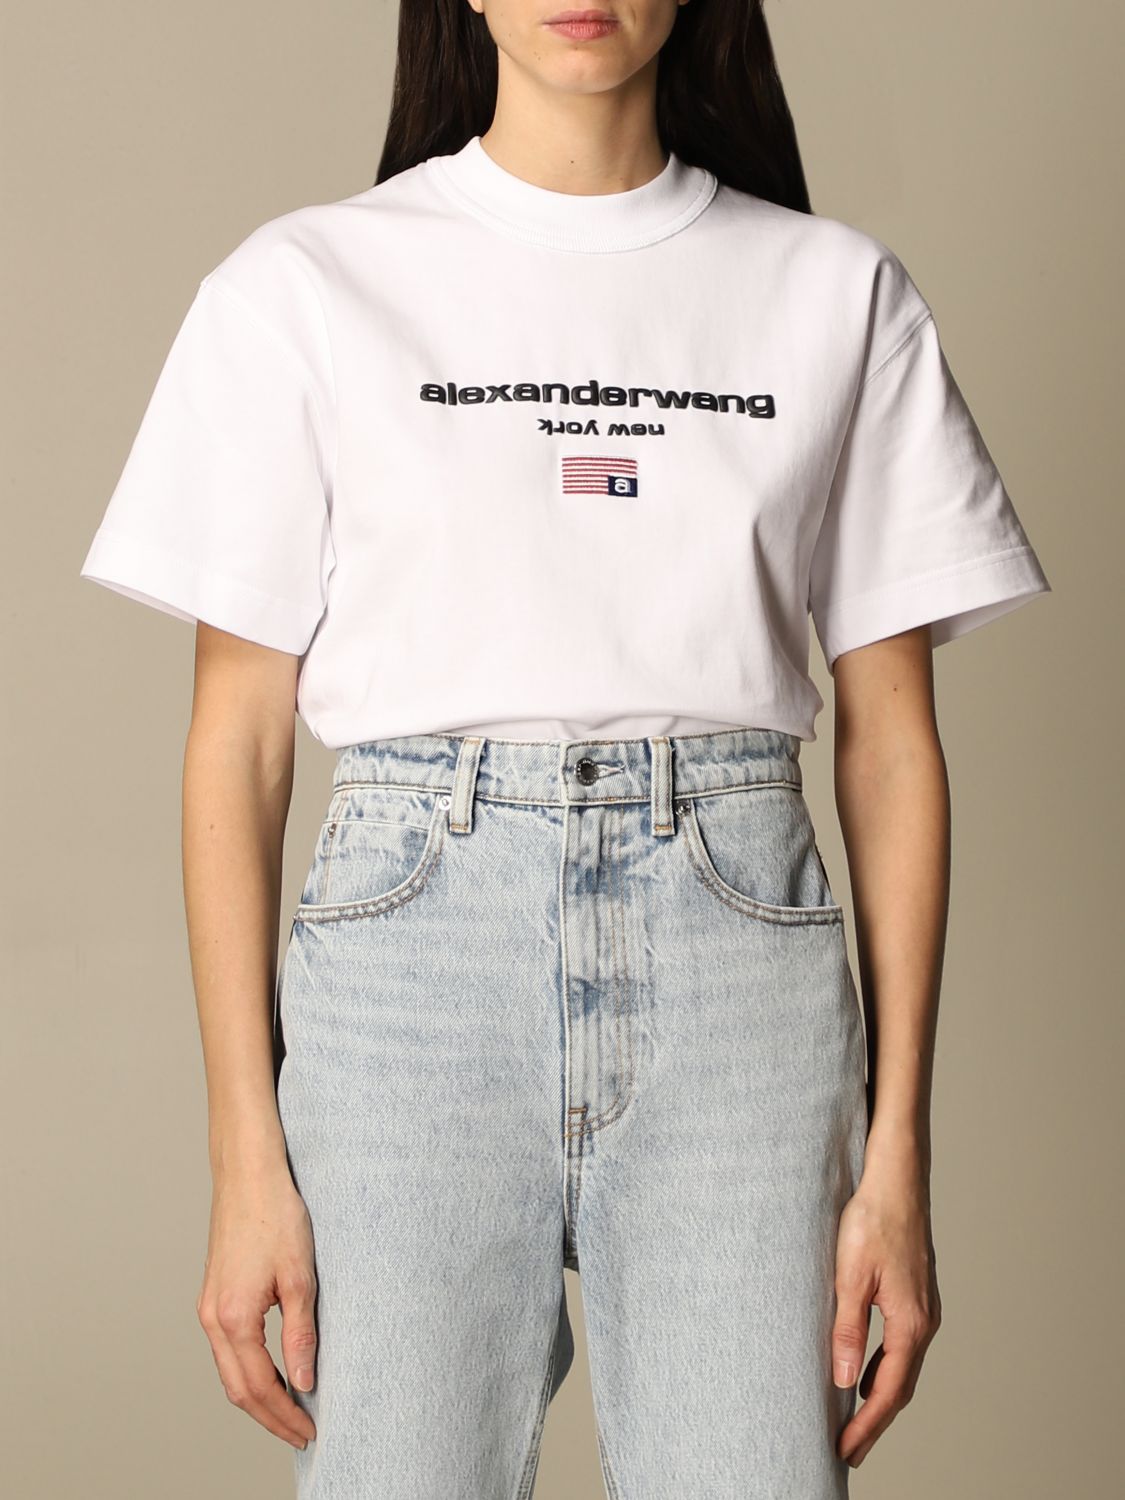 Alexanderwang Tシャツ